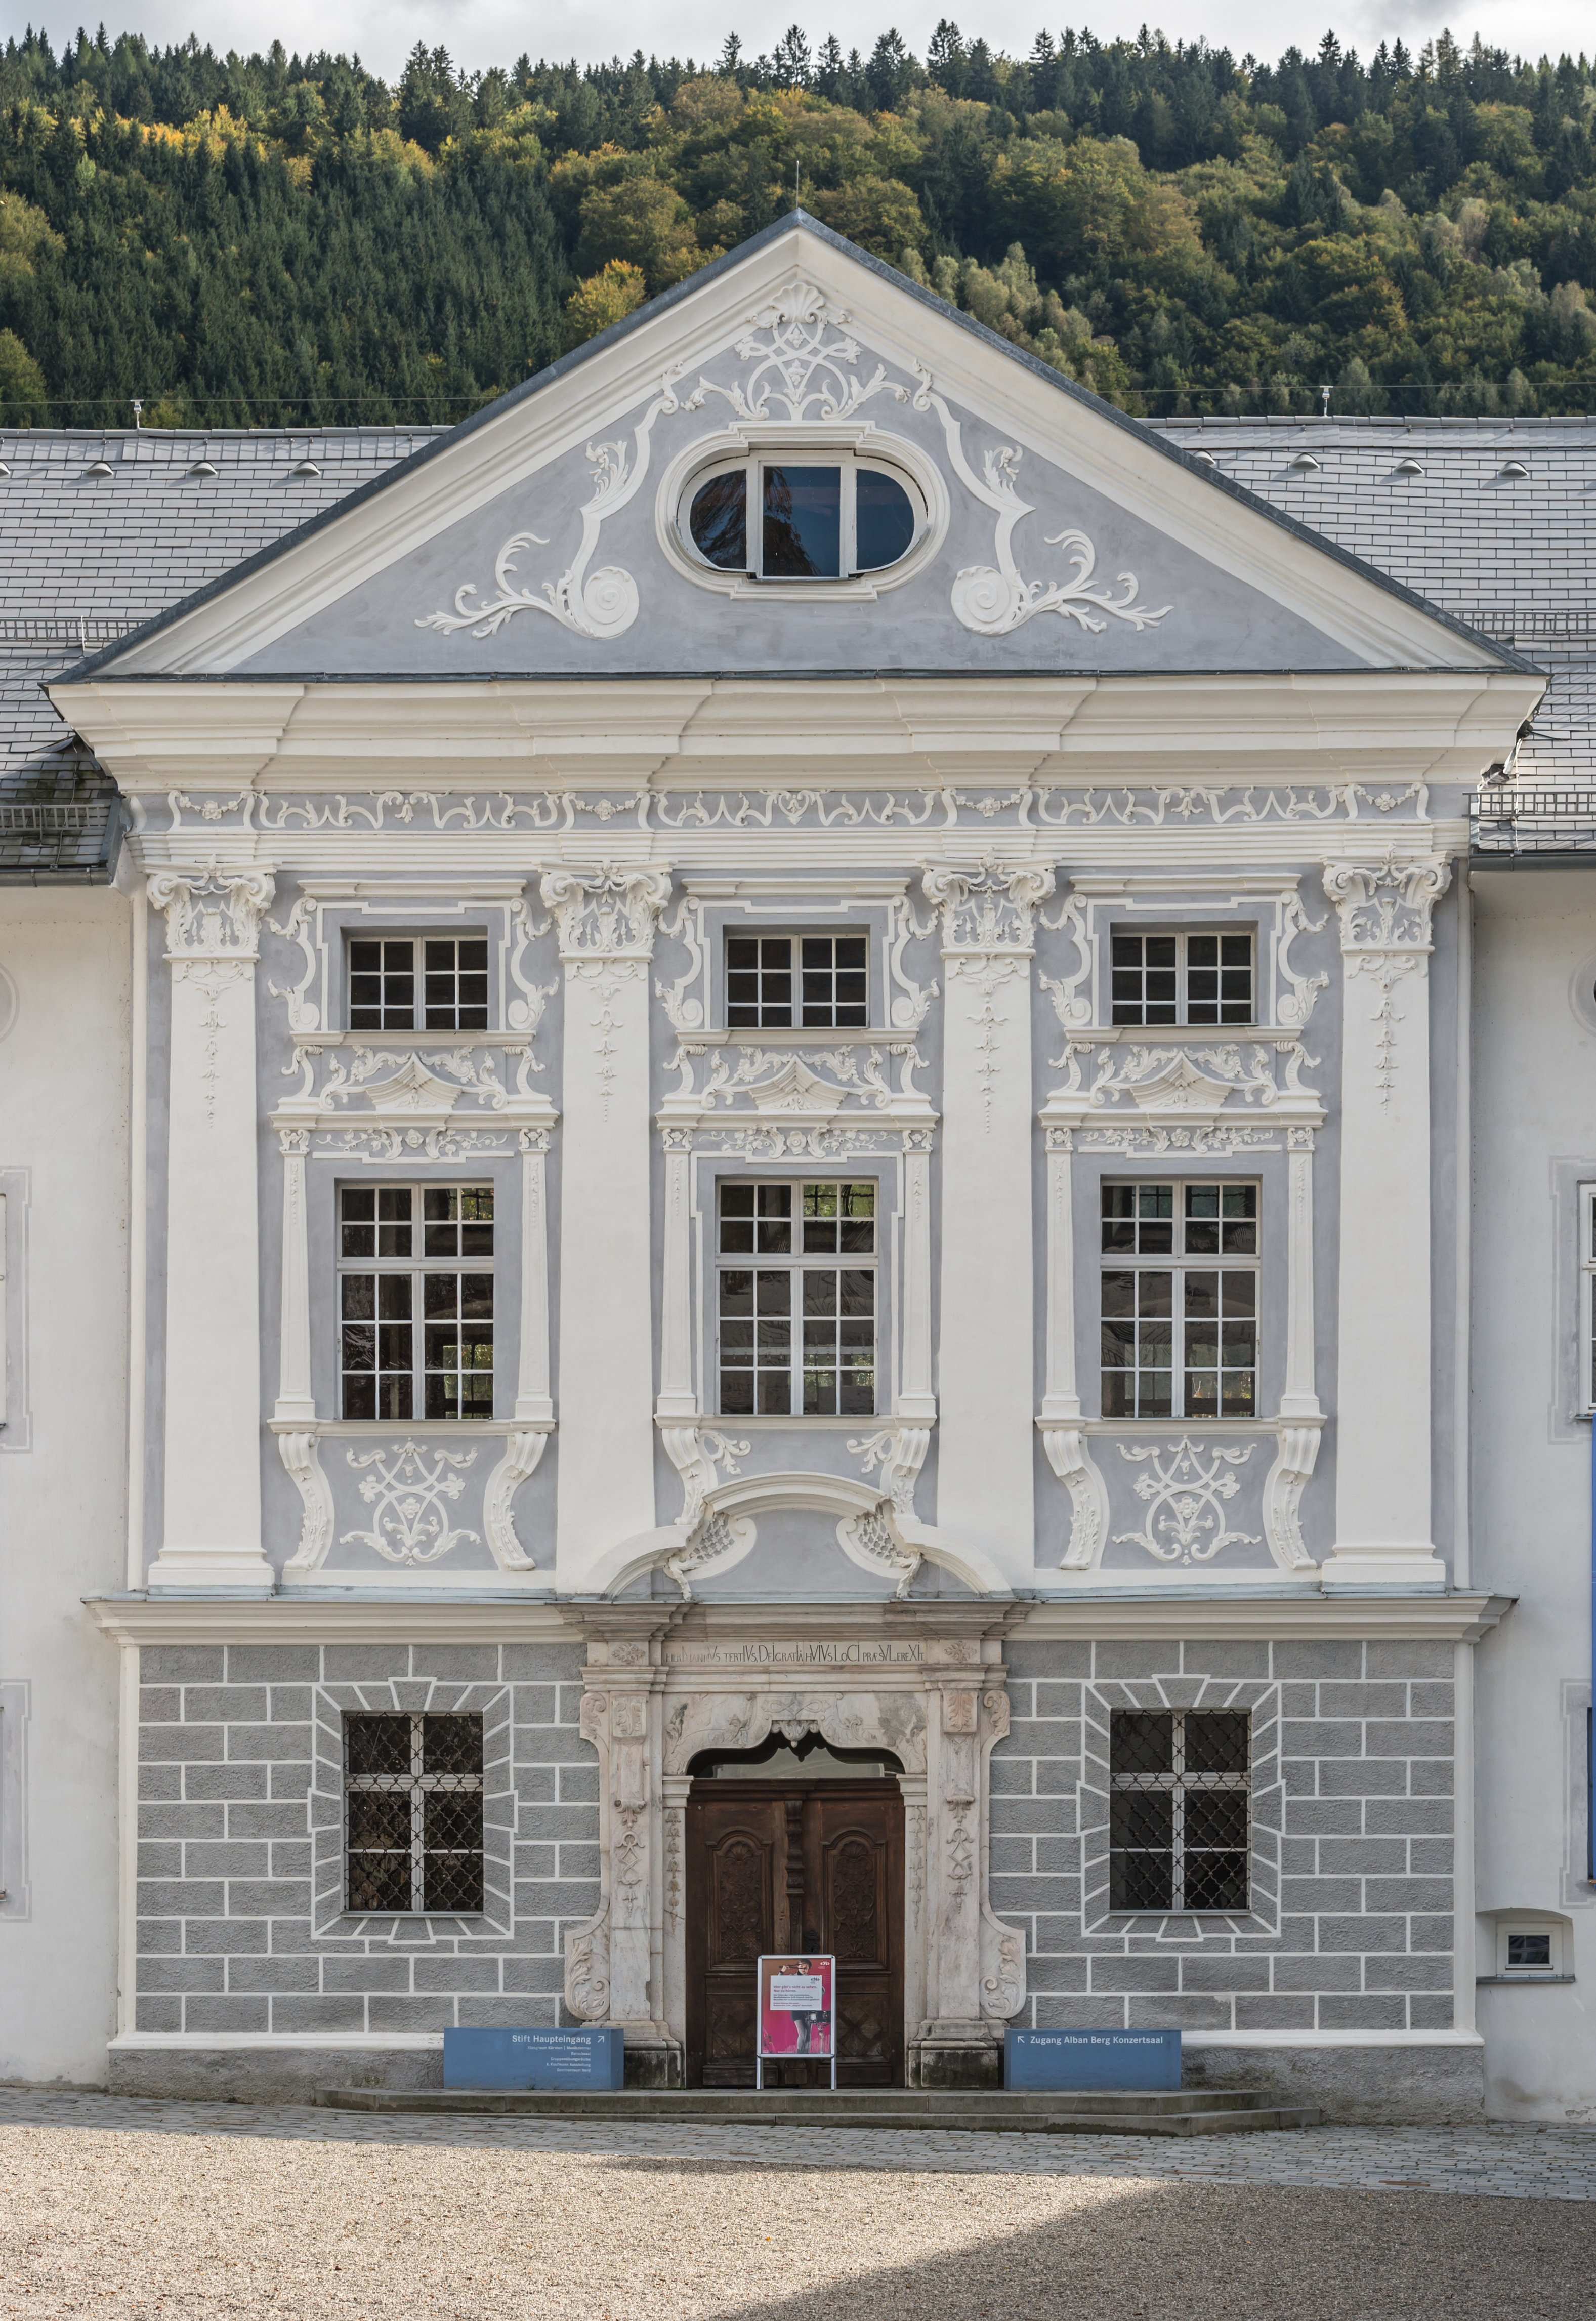 Ossiach Stift S-Trakt barocke Hoffassade Mittelrisalit mit Sockelgeschoß 06102016 4558